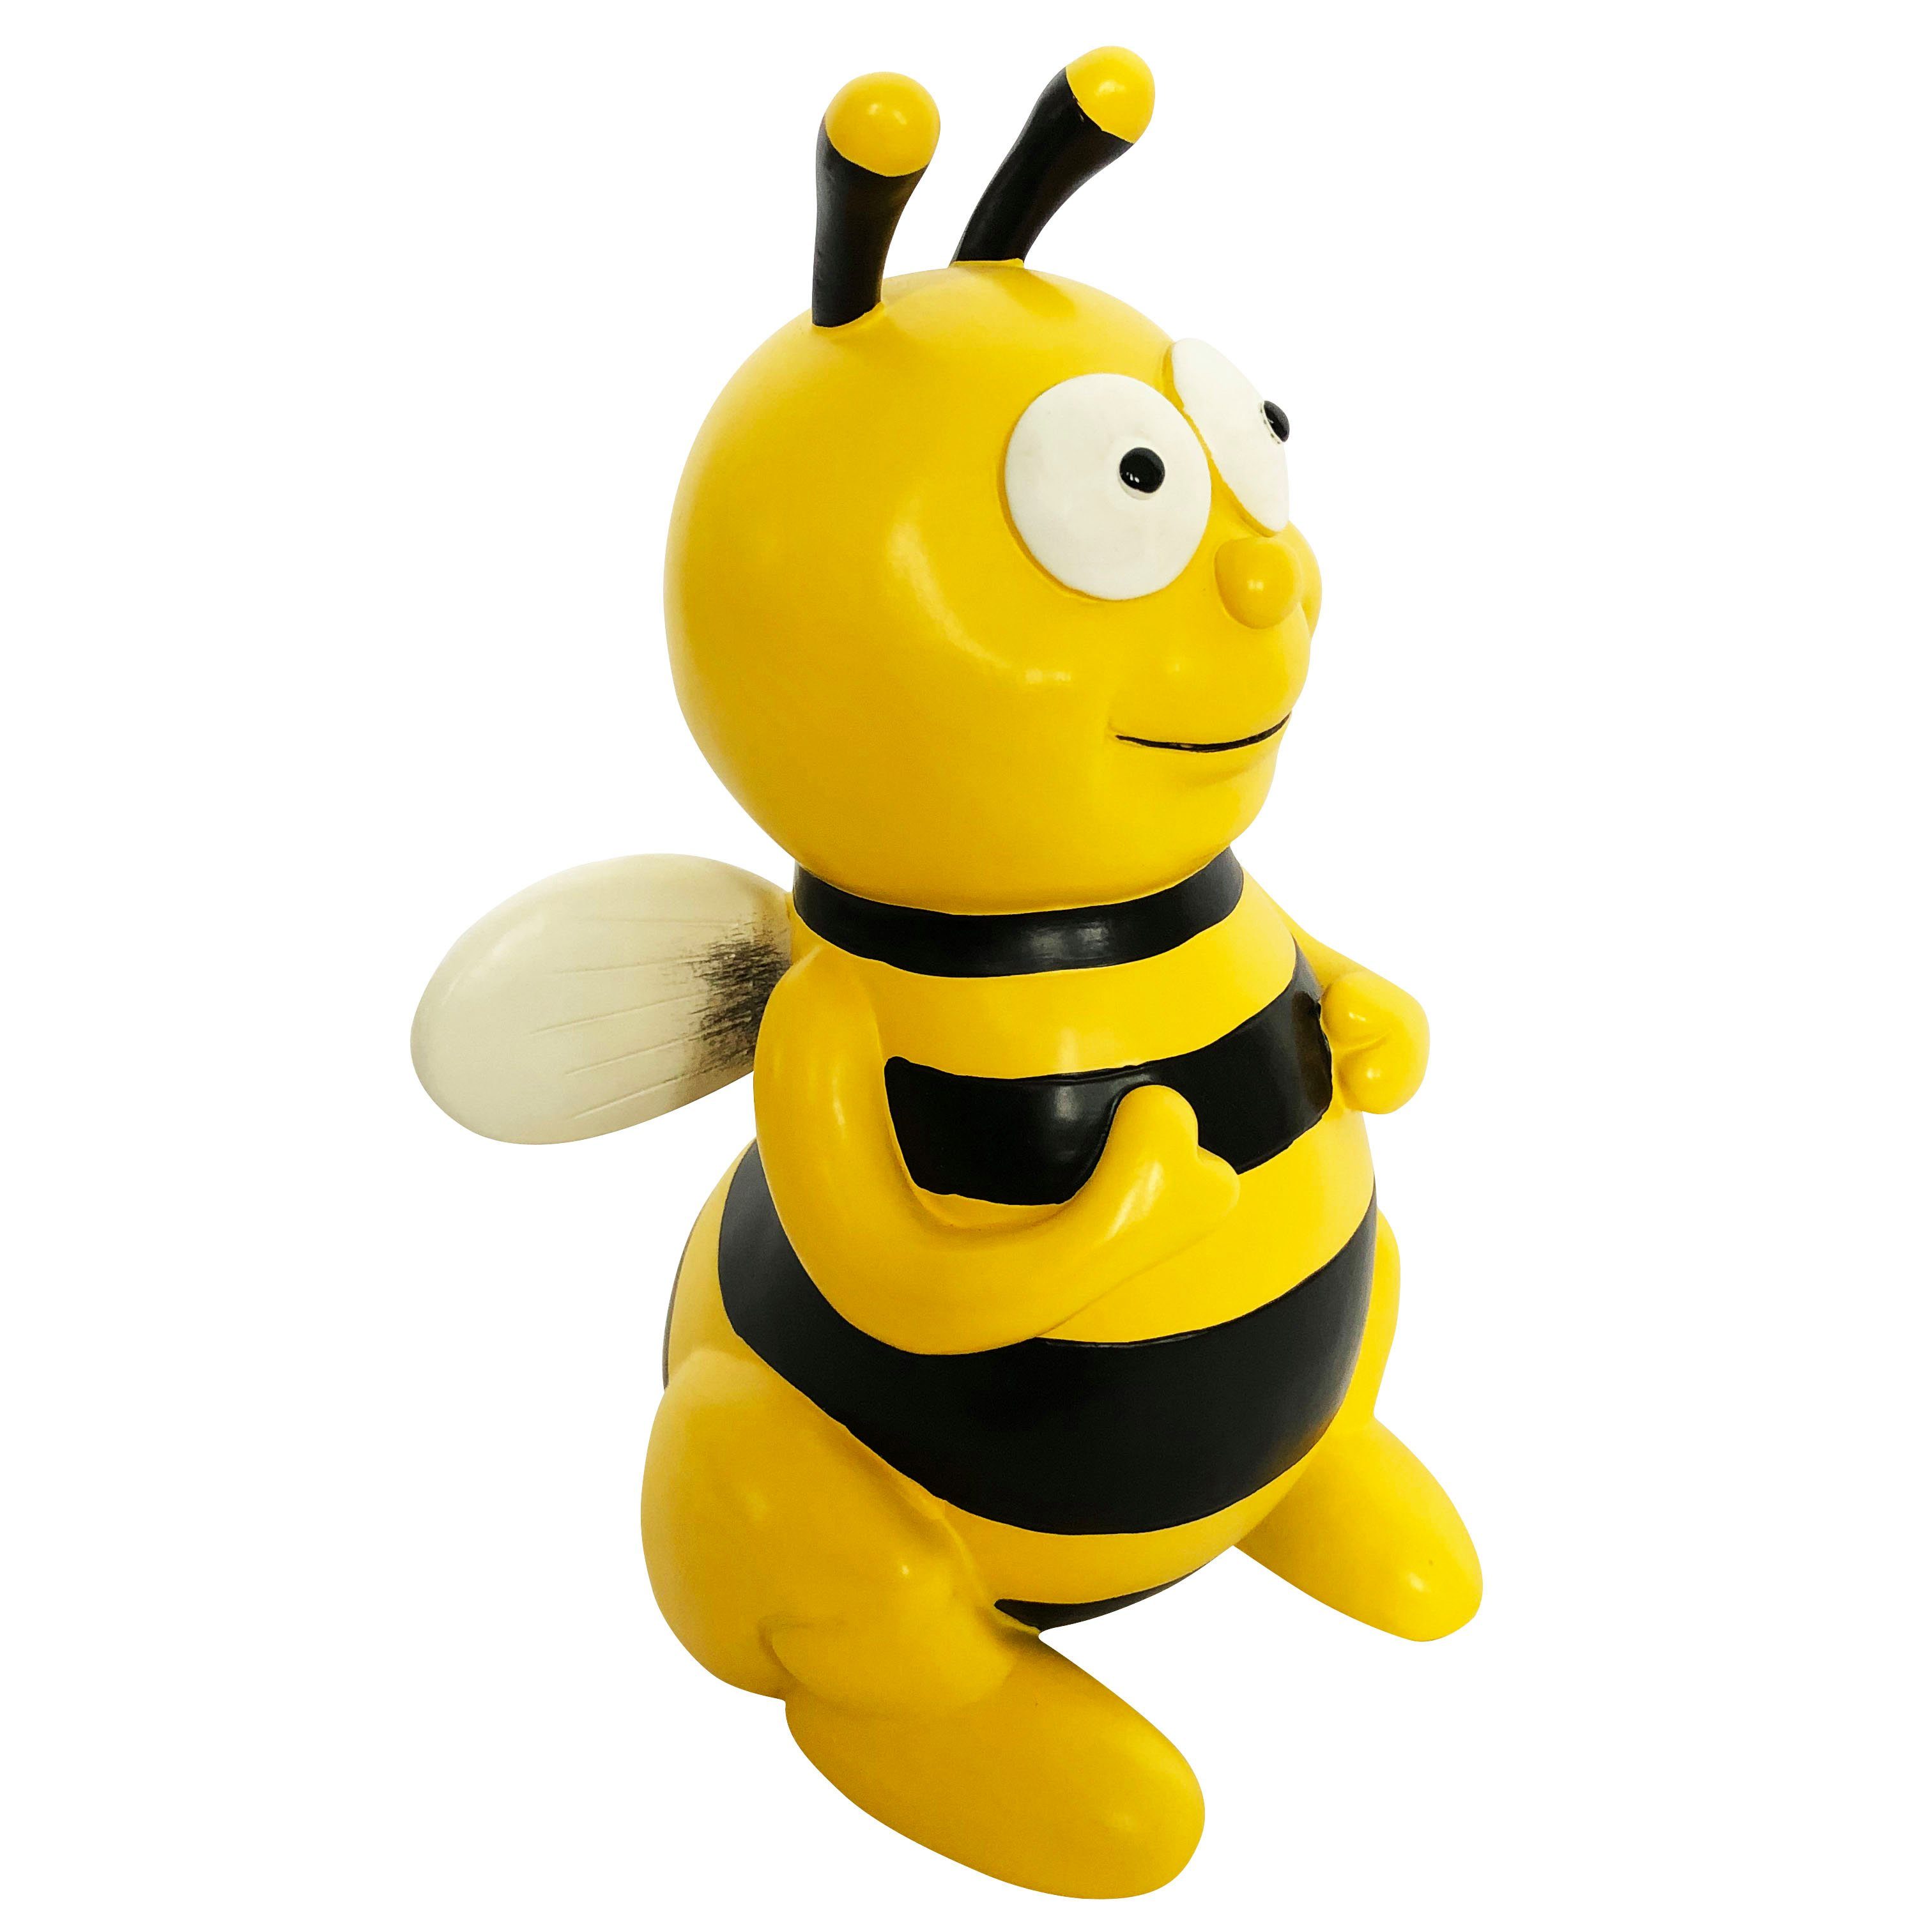 Gartenfigur sitzende Biene lustige Deko Tierfigur Gartendeko